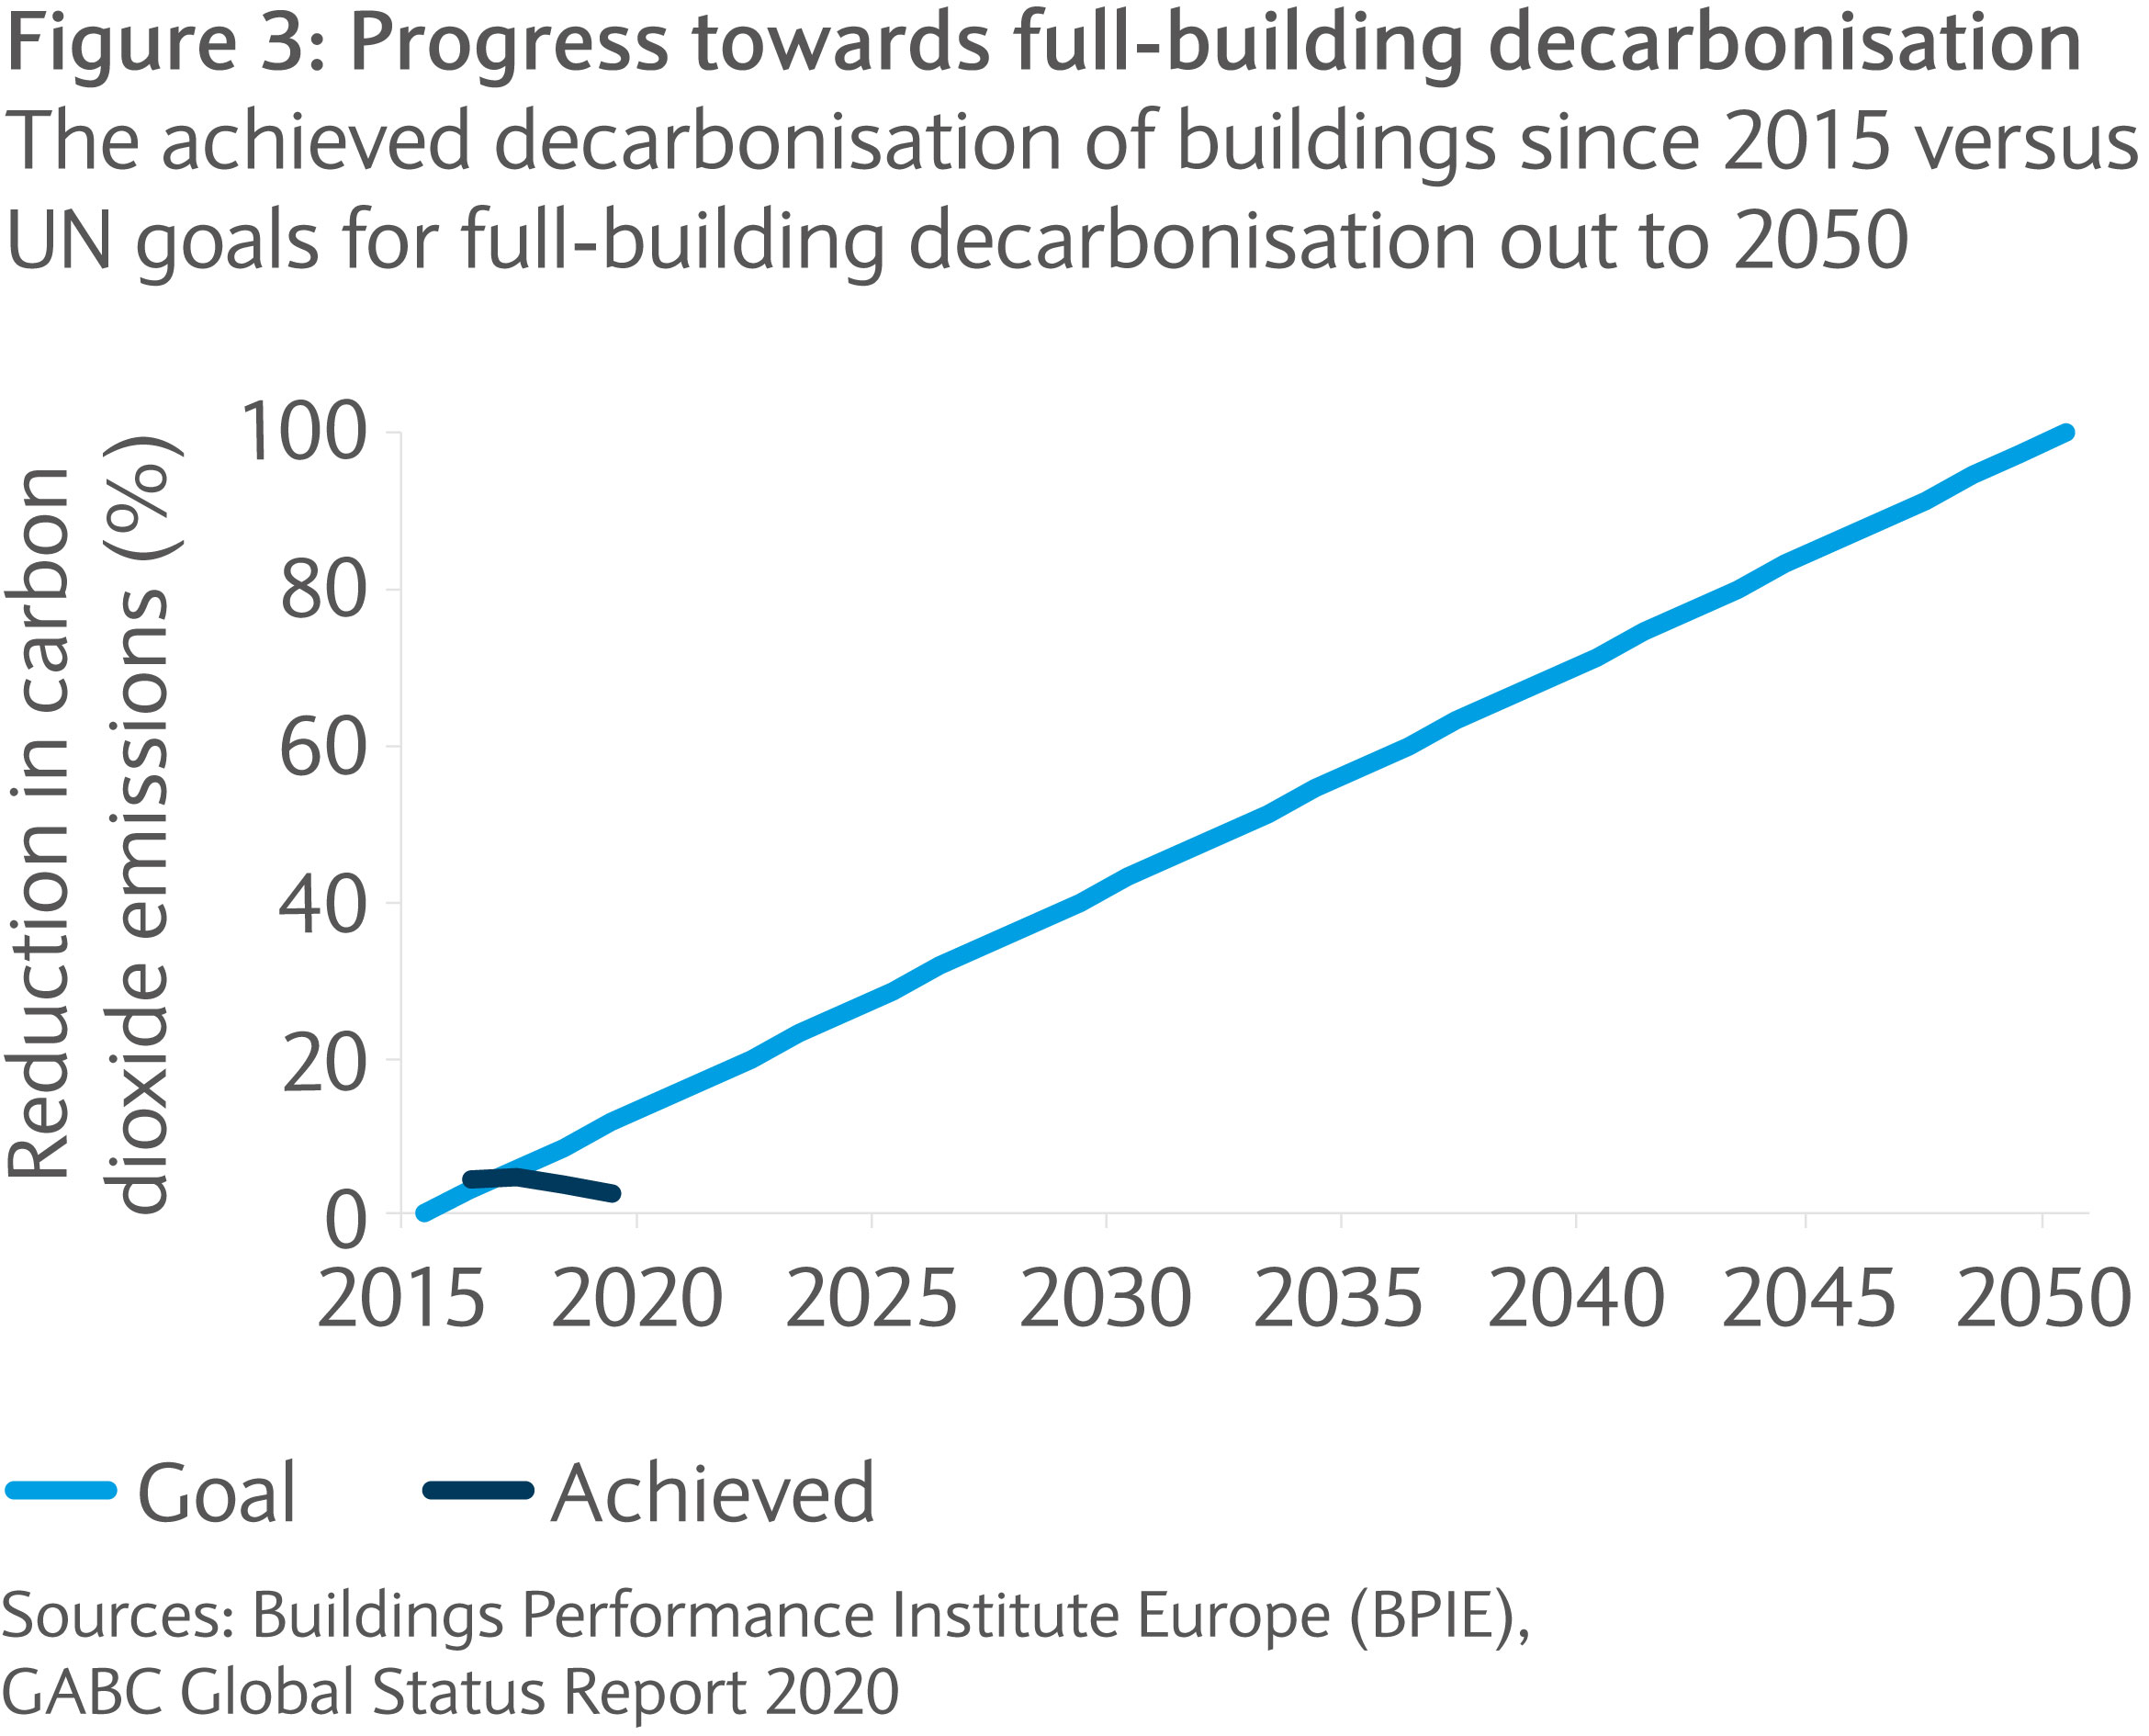 Building decarbonisation